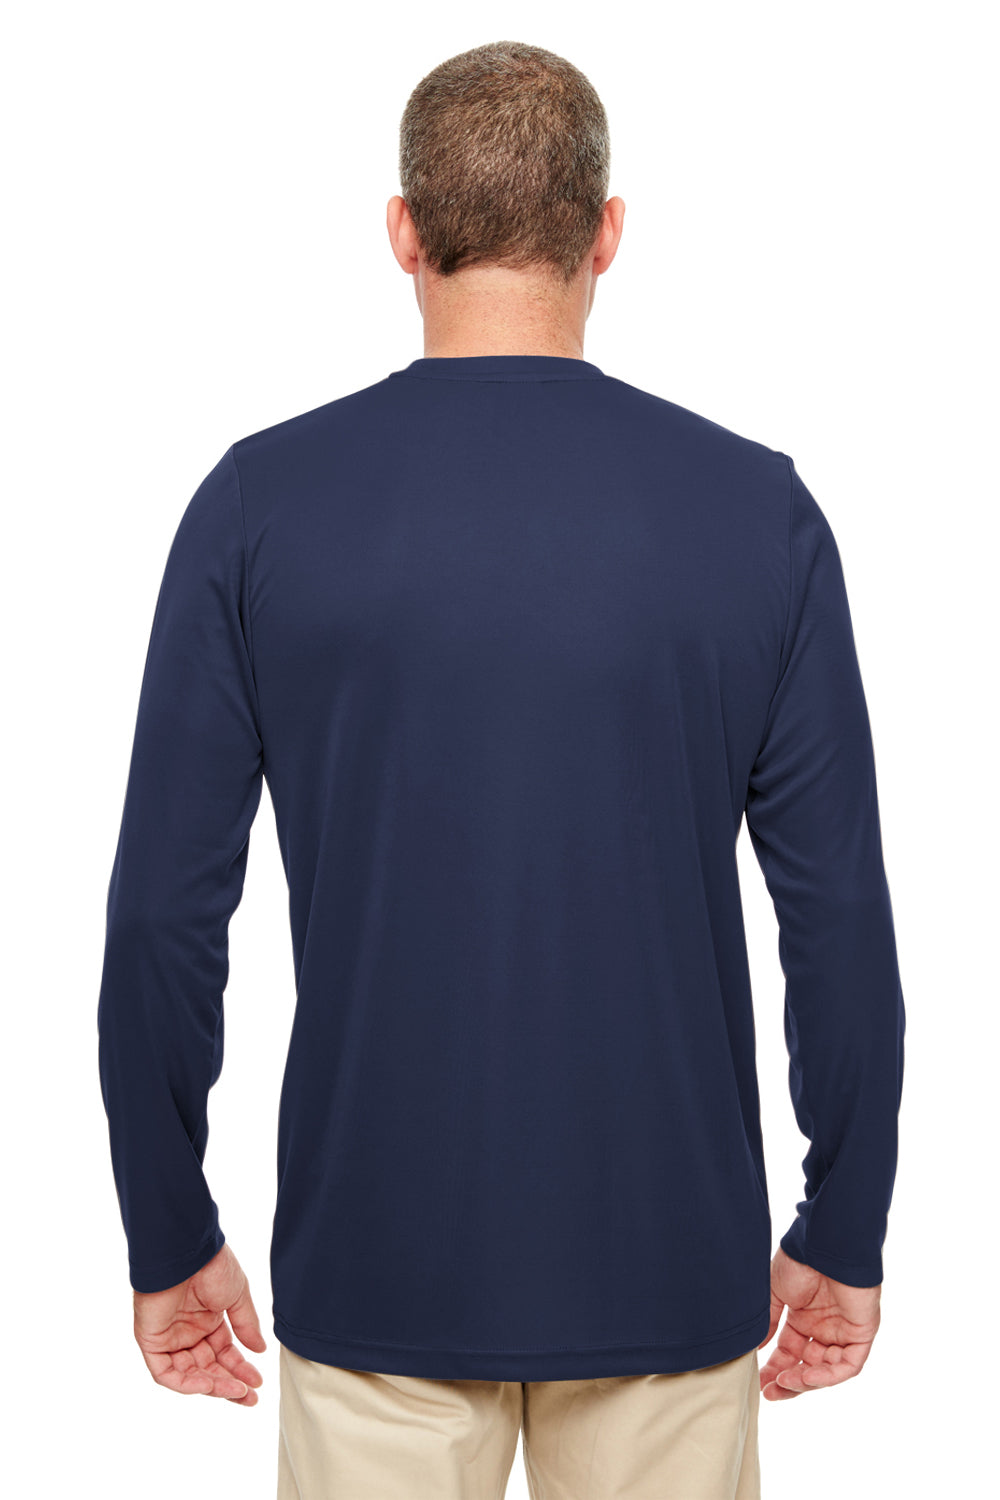 UltraClub 8622 Mens Cool & Dry Performance Moisture Wicking Long Sleeve Crewneck T-Shirt Navy Blue Back